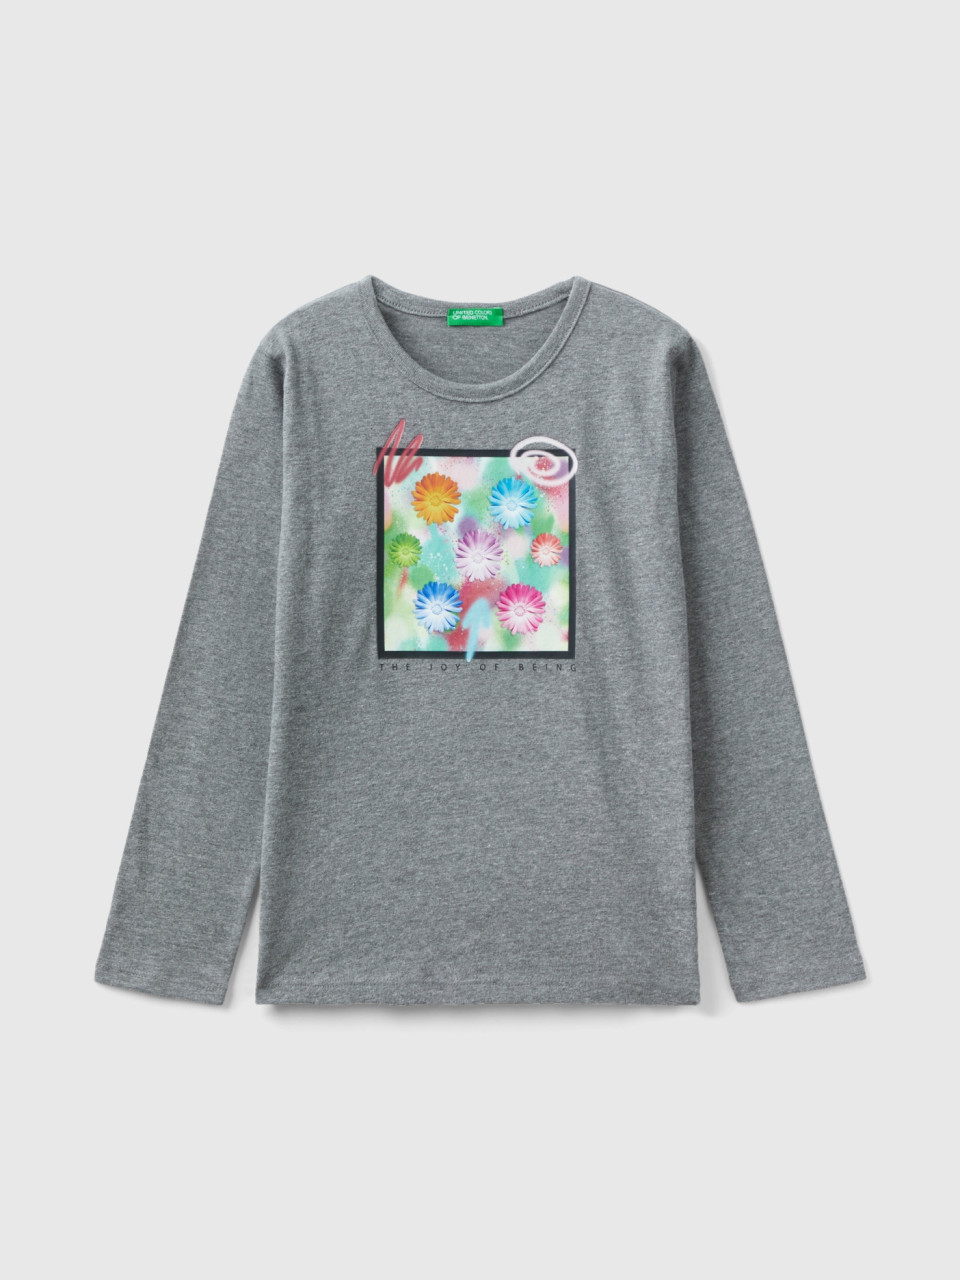 Benetton, Warm T-shirt With Photo Print, Dark Gray, Kids